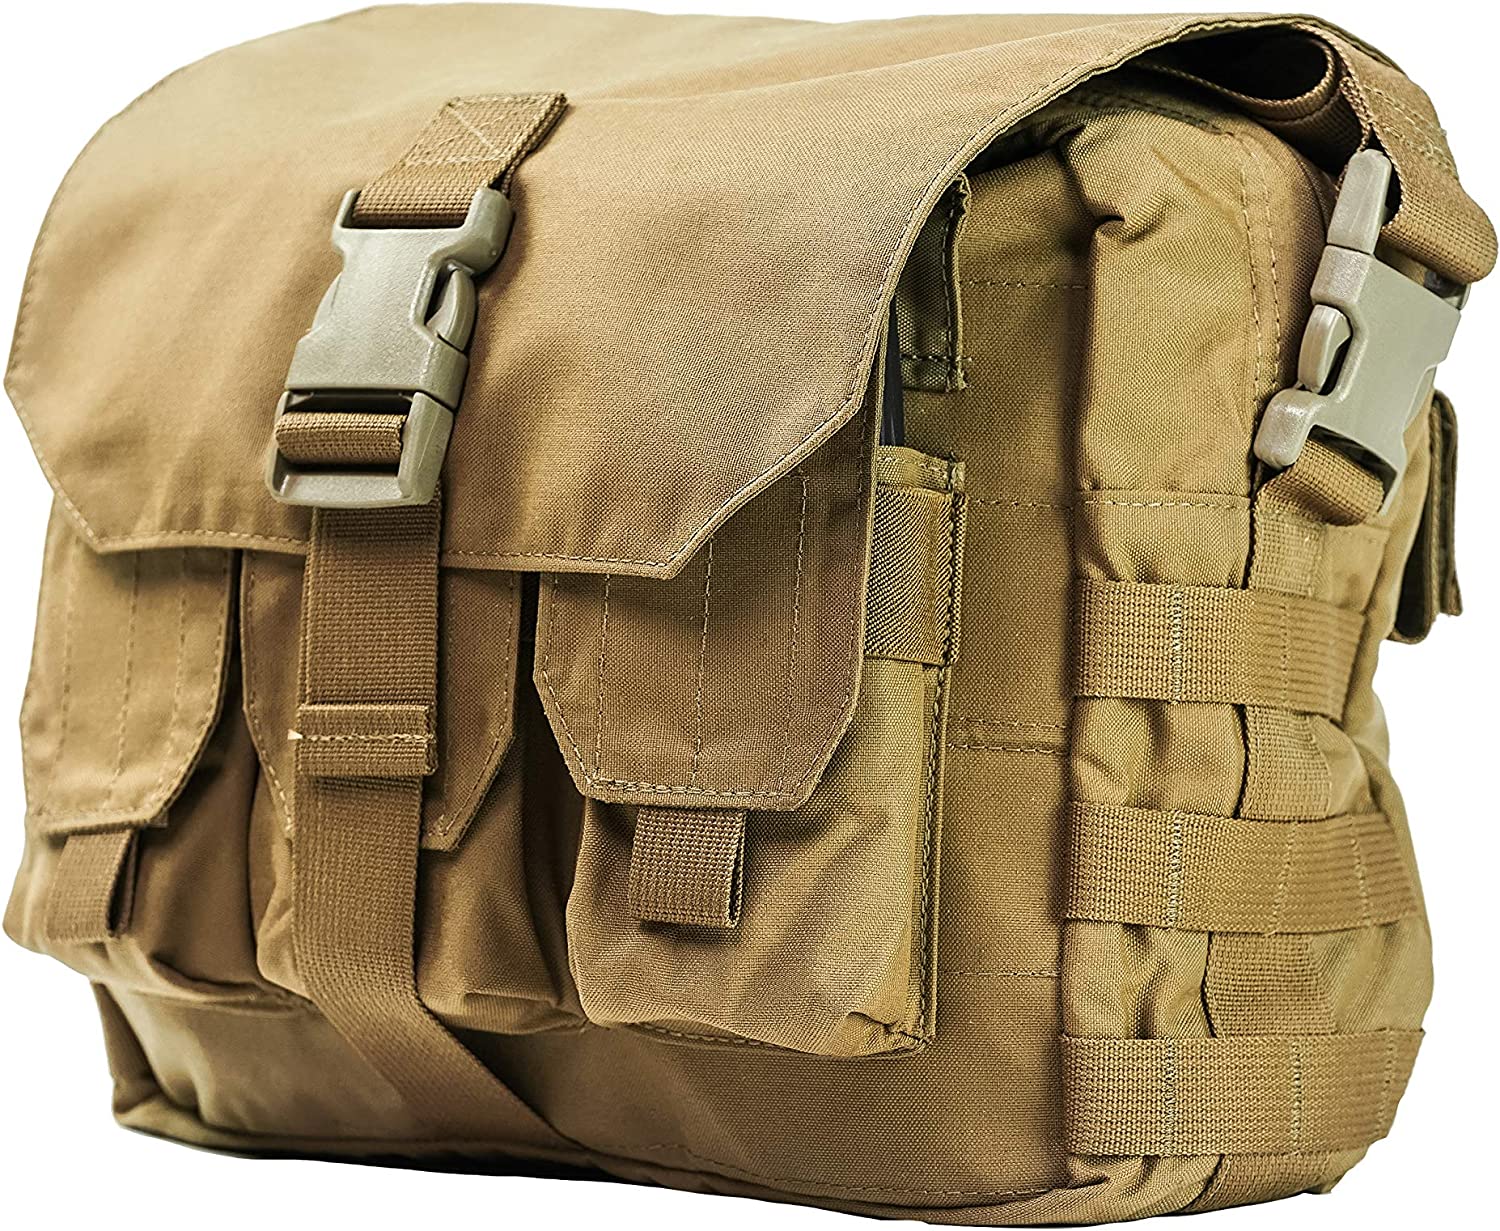 T3 Bolt Bag, Security personel Sling Bag, Tactical Shoulder Bag for Hunting and Hiking, Heavy-Duty Grab-and-Go Bag, 12-Inch Shoulder Drop, Coyote Tan